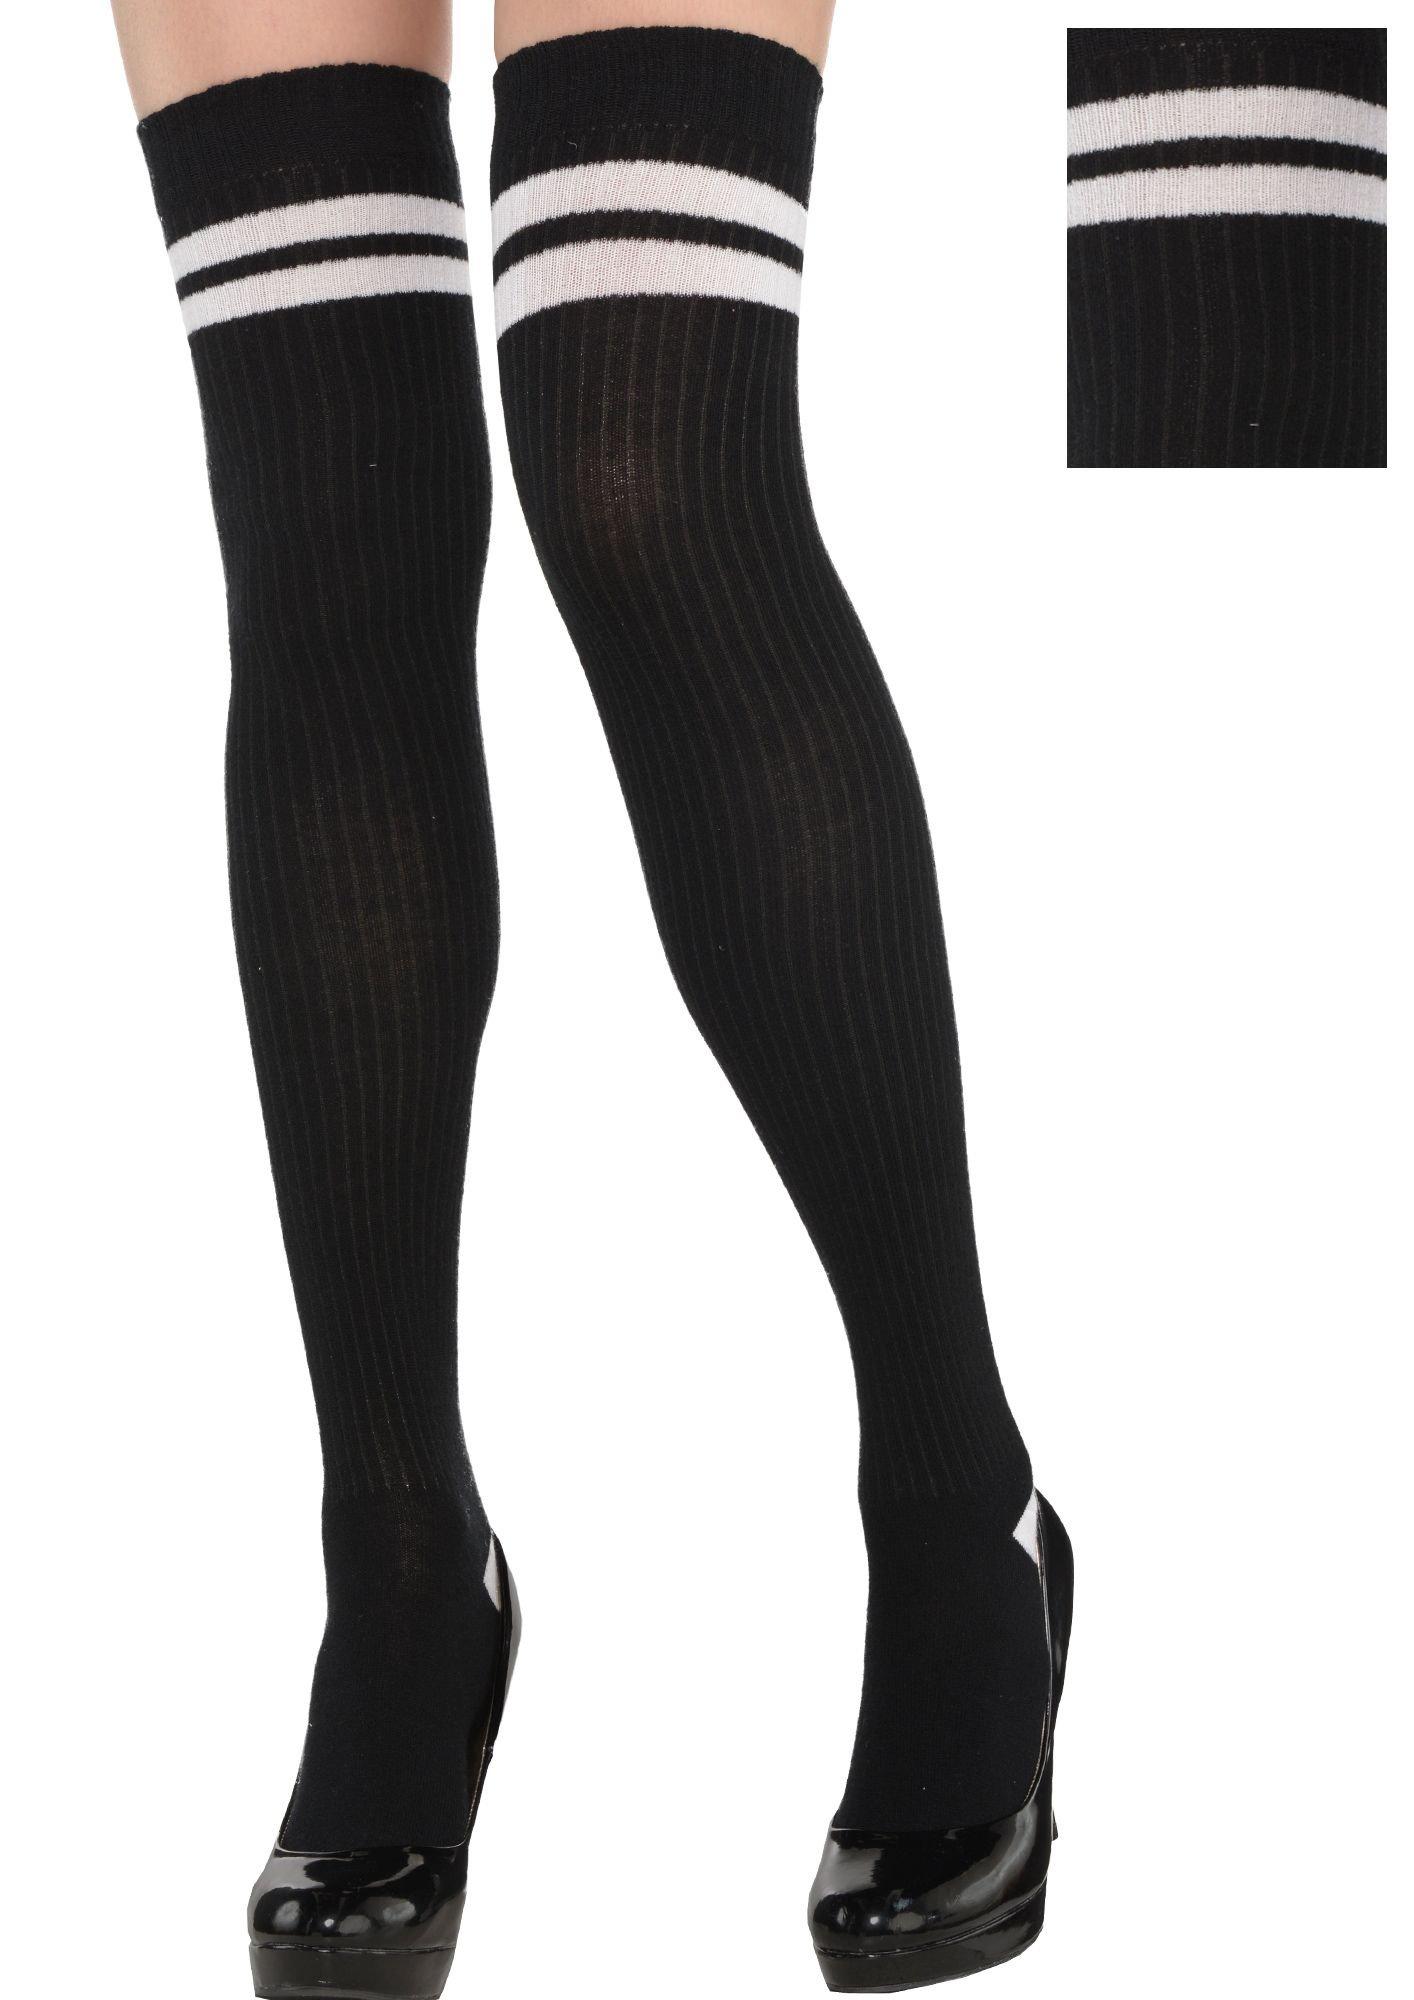 Adult Black & White Knee Socks